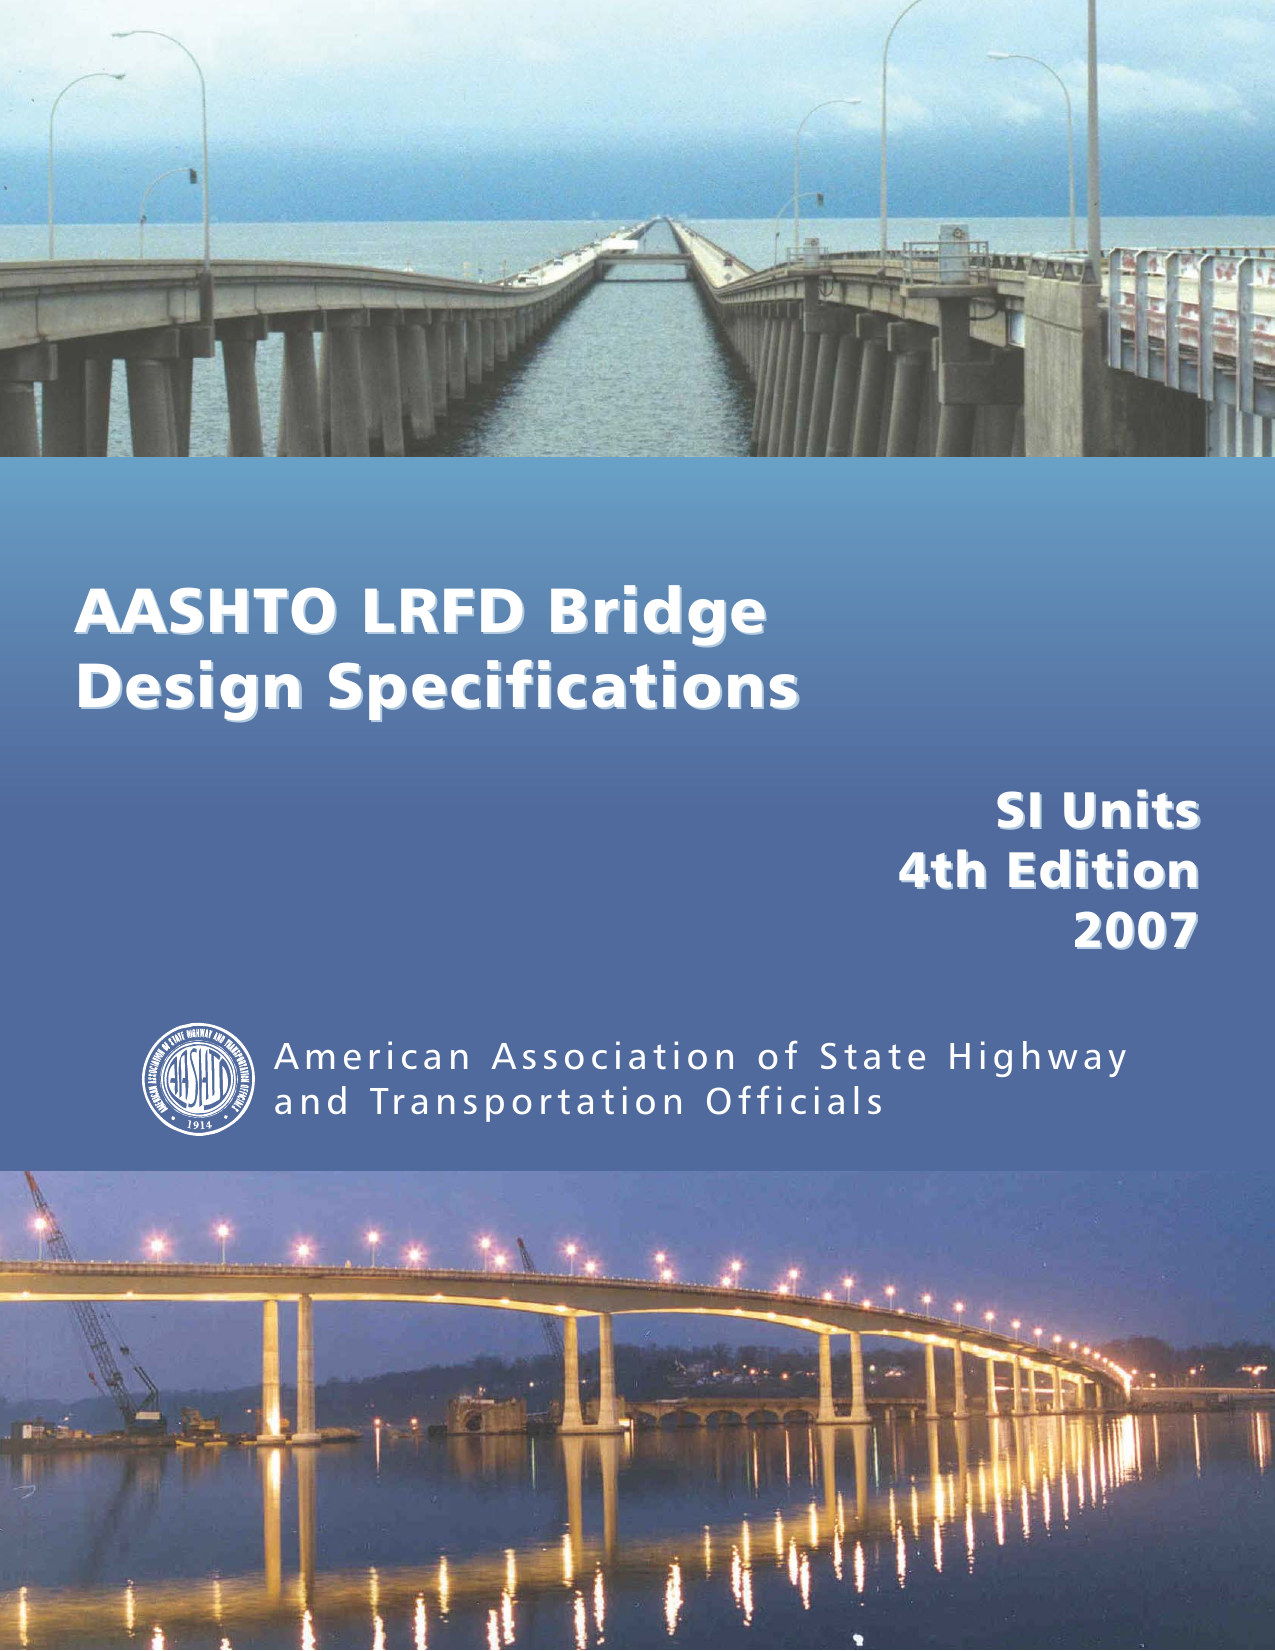 Aashto lrfd bridge design specifications 8th edition pdf free download razer blackwidow v3 software download